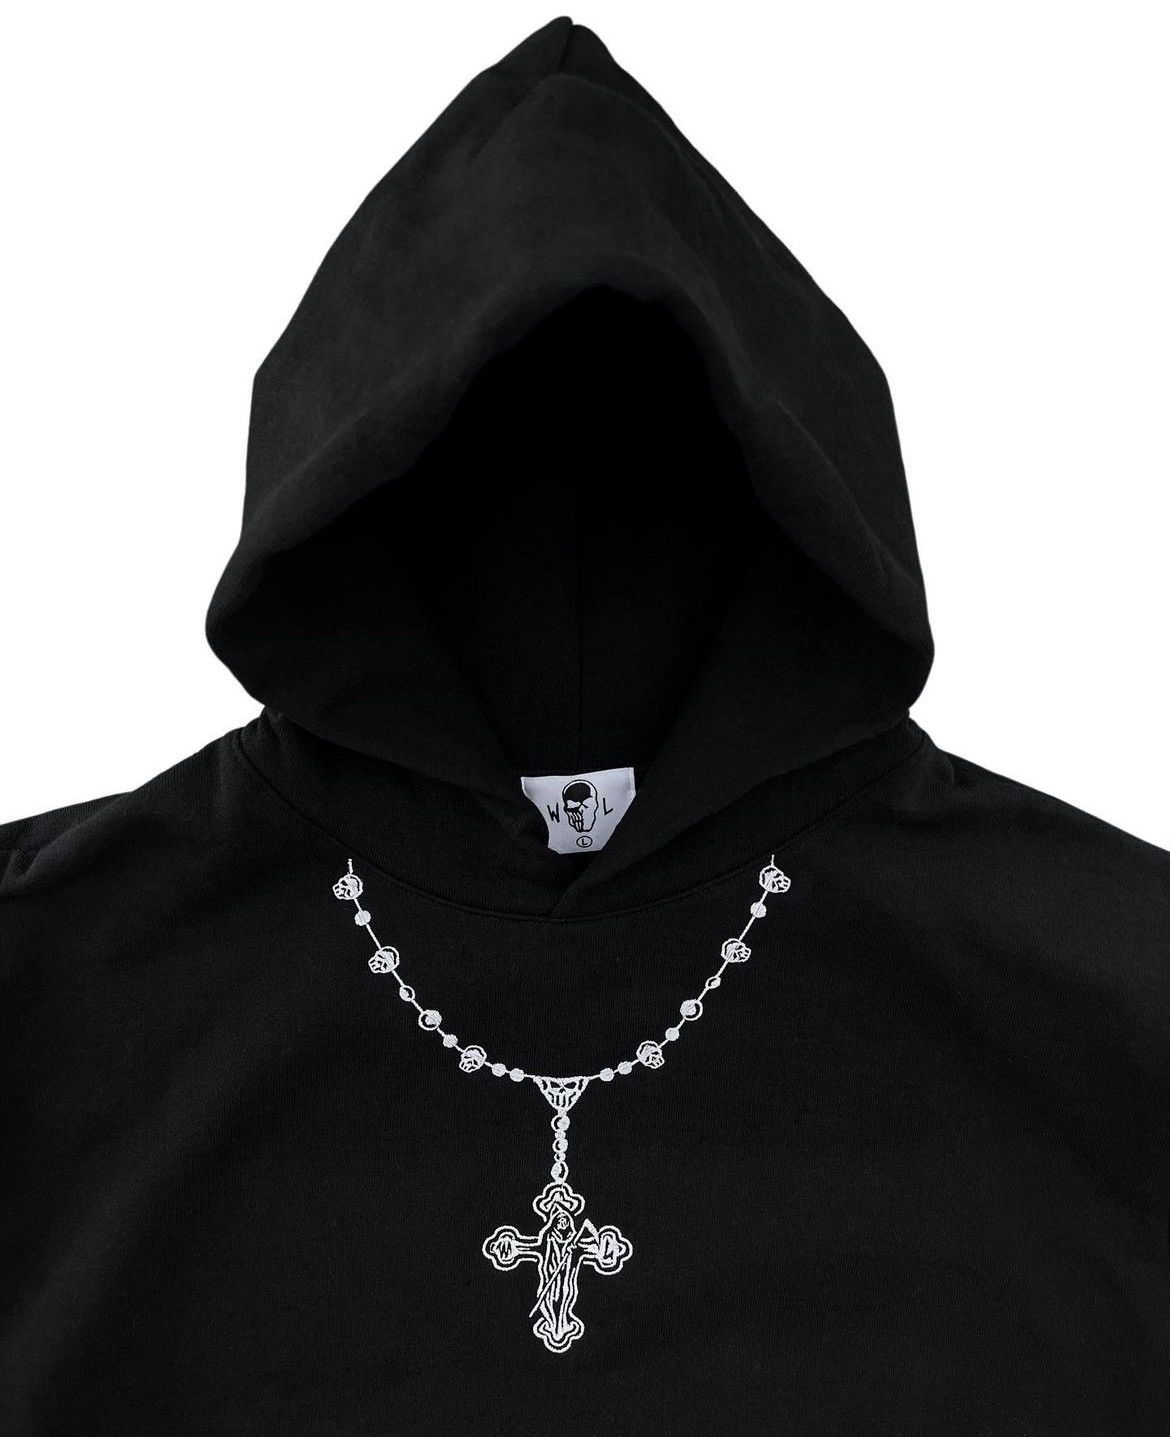 Warren Lotas Black Rosary Hoodie Lサイズ公式オンラインストアで購入